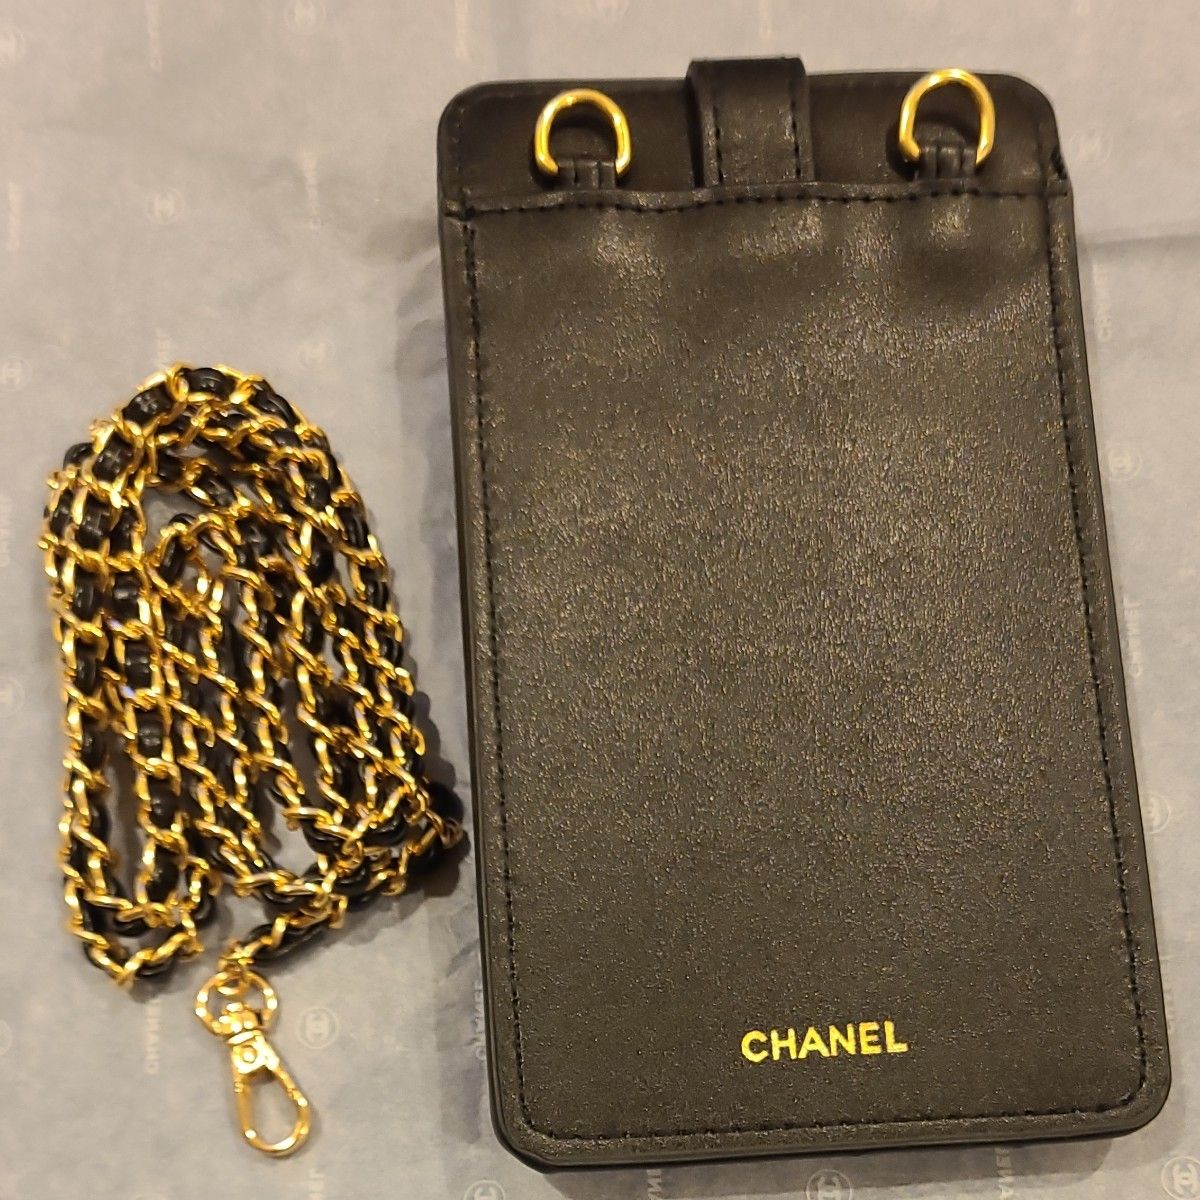 CHANEL COCO CRUSH チェーン付ポーチ (ノベルティ)箱付き - モバイルケース